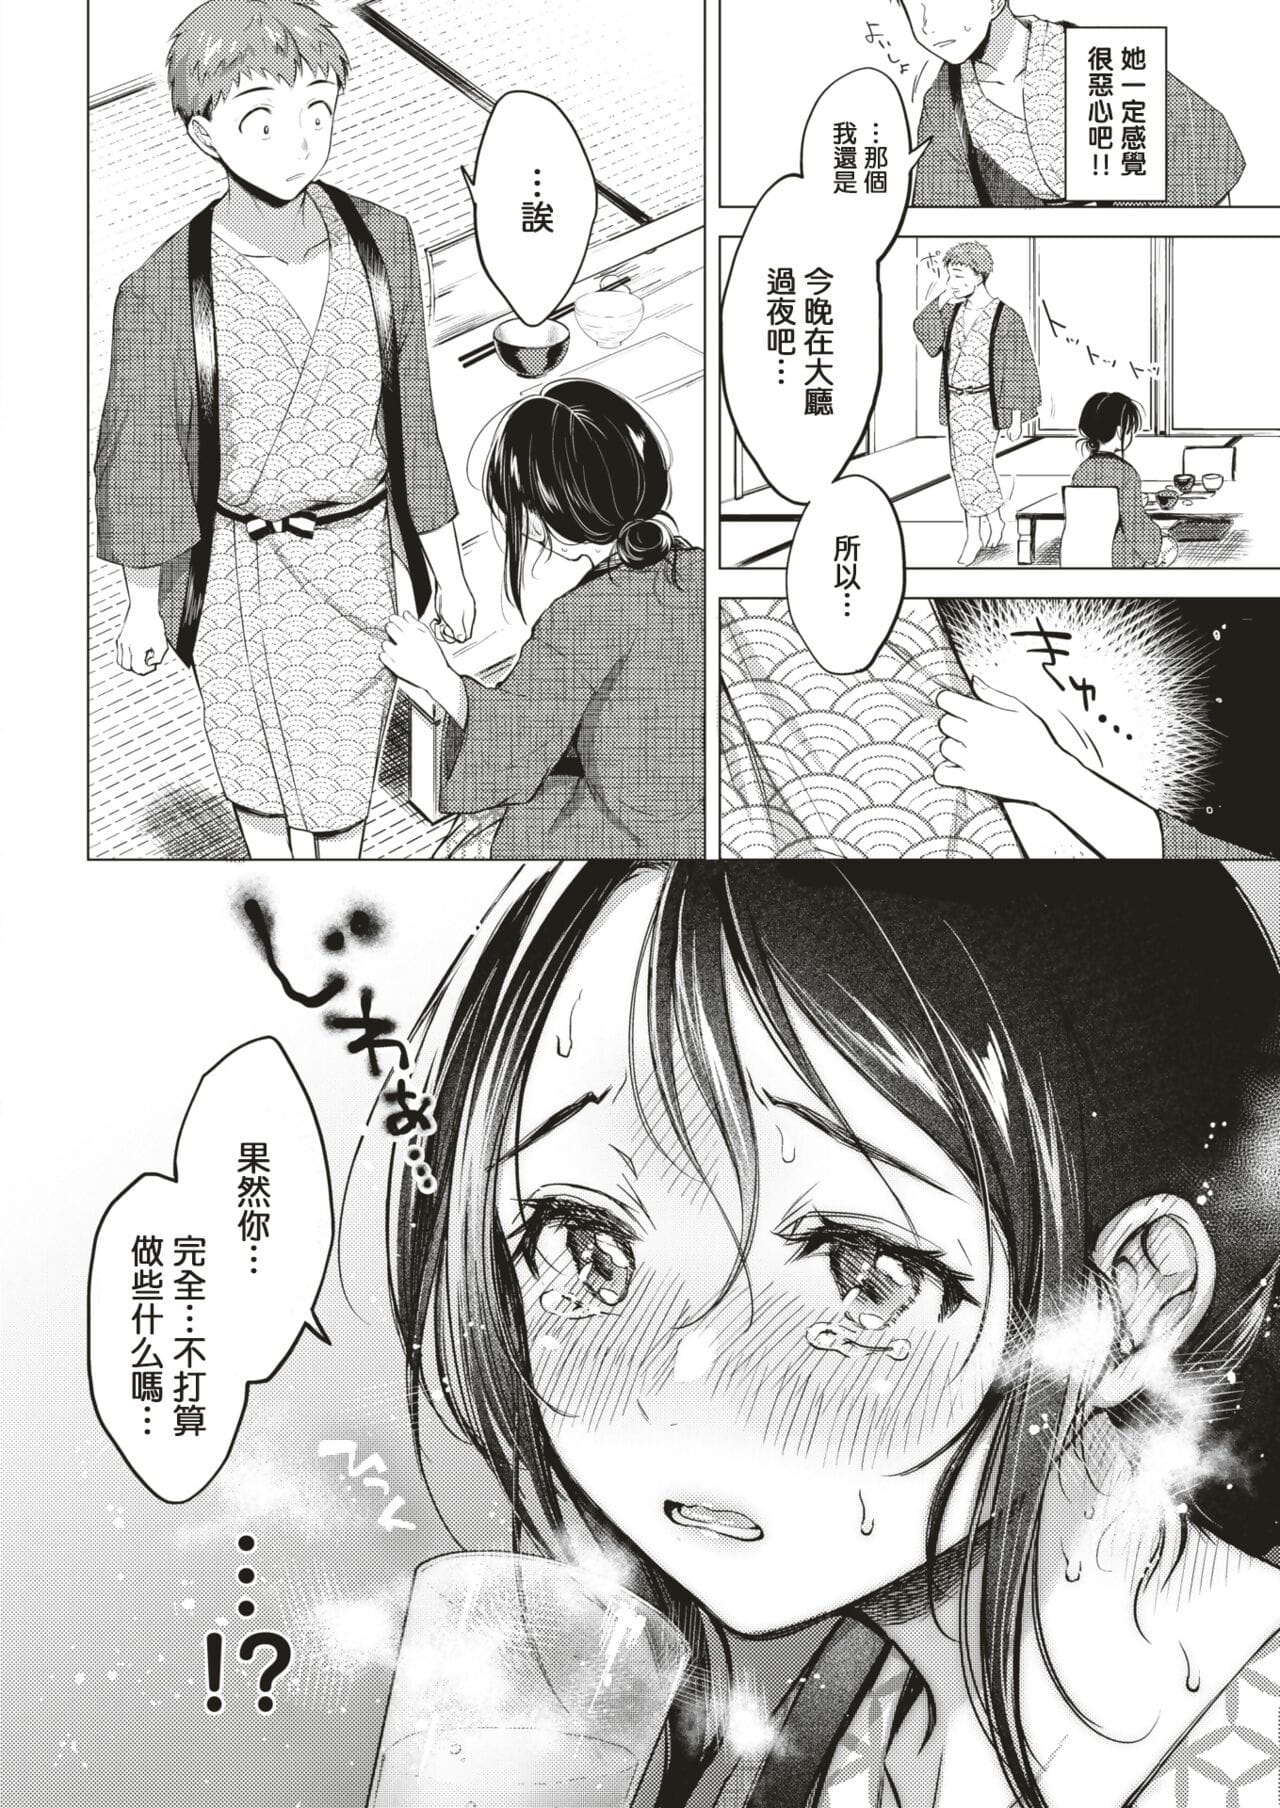 7 gatsu ไม่ ougonhi page 1